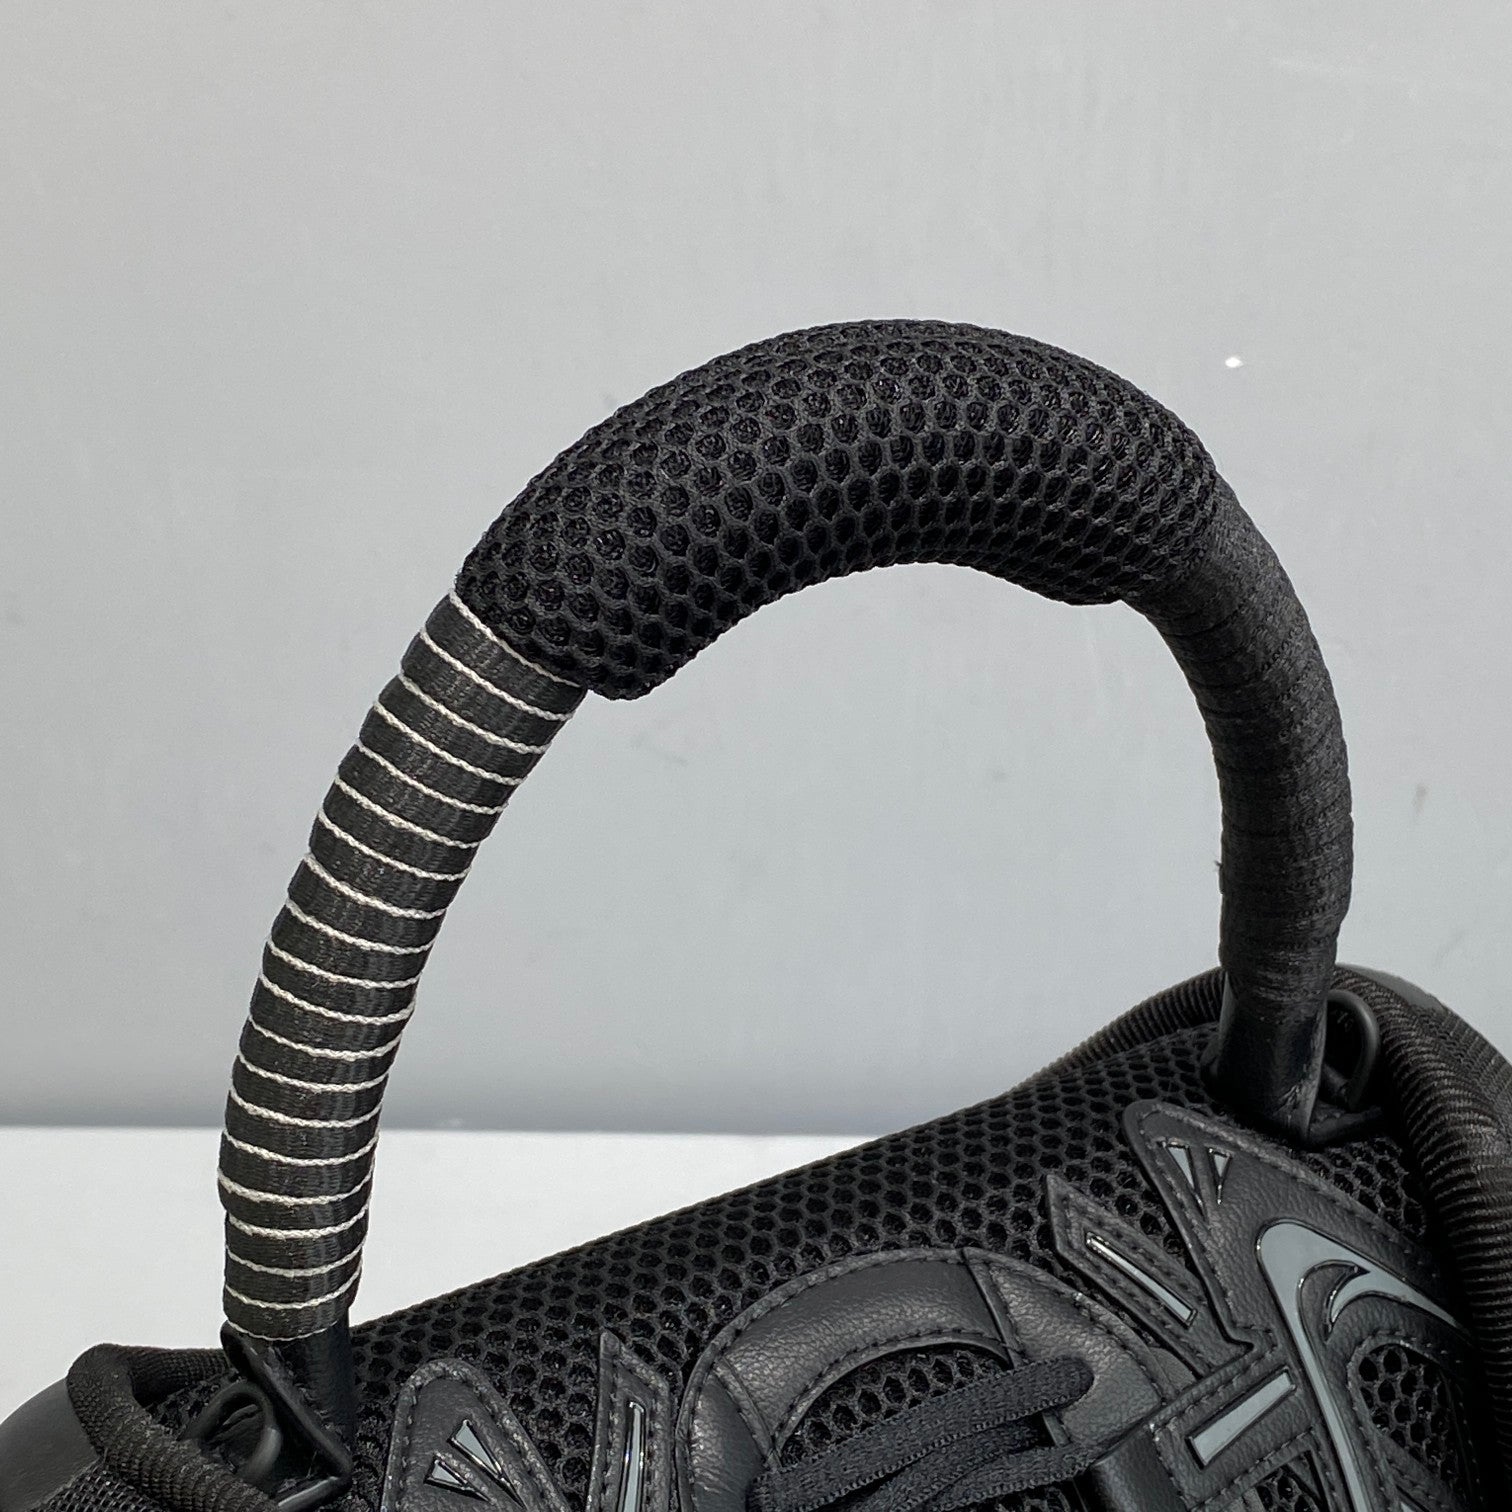 Balenciaga Sneakerhead Top Handle Bag - MarKat store